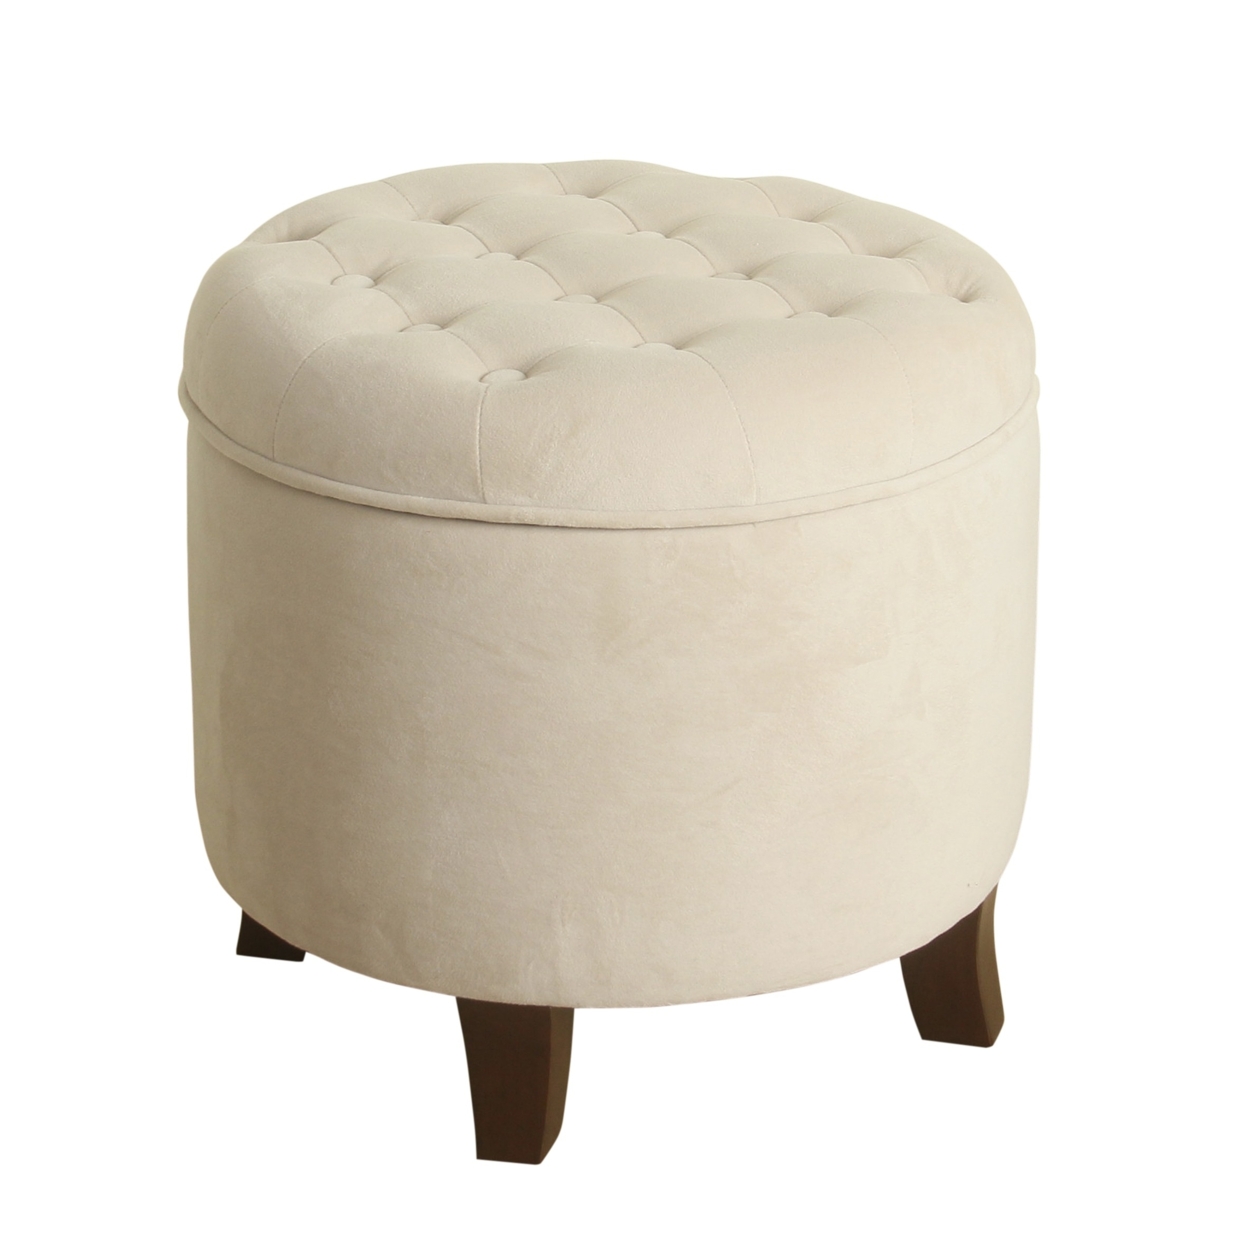 Button Tufted Velvet Upholstered Wooden Ottoman With Hidden Storage, Cream And Brown- Saltoro Sherpi